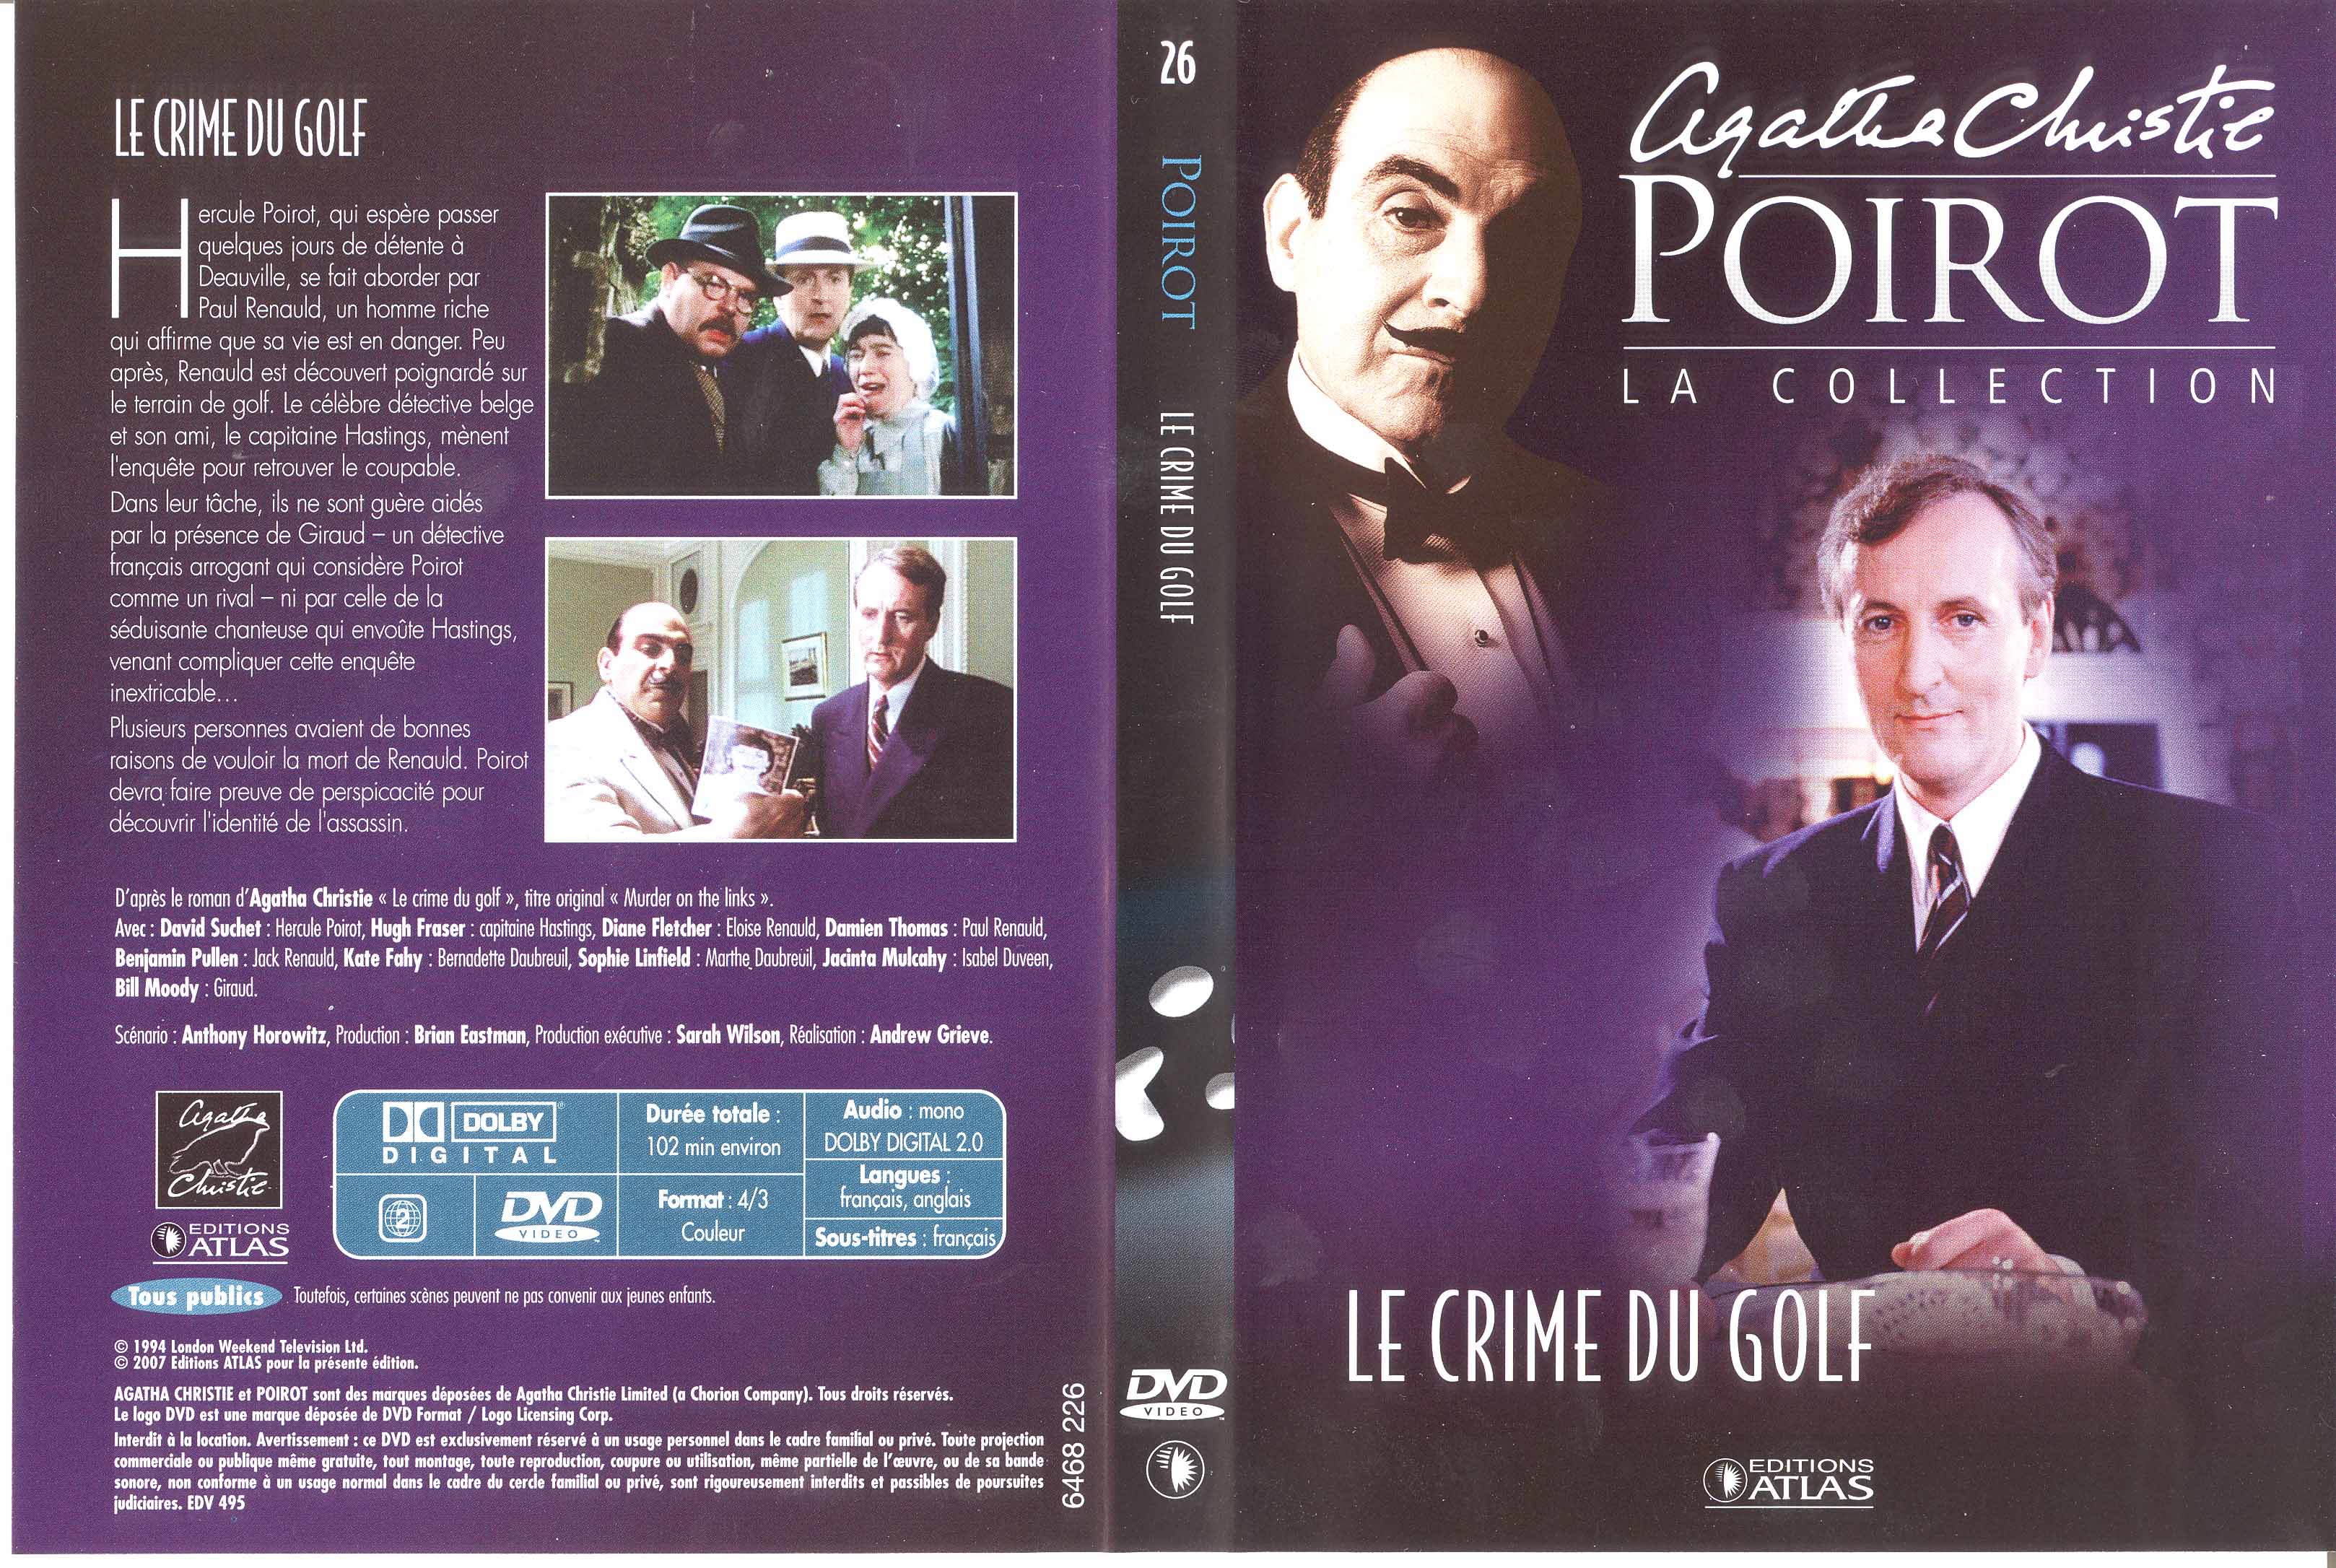 Jaquette DVD Hercule Poirot vol 26